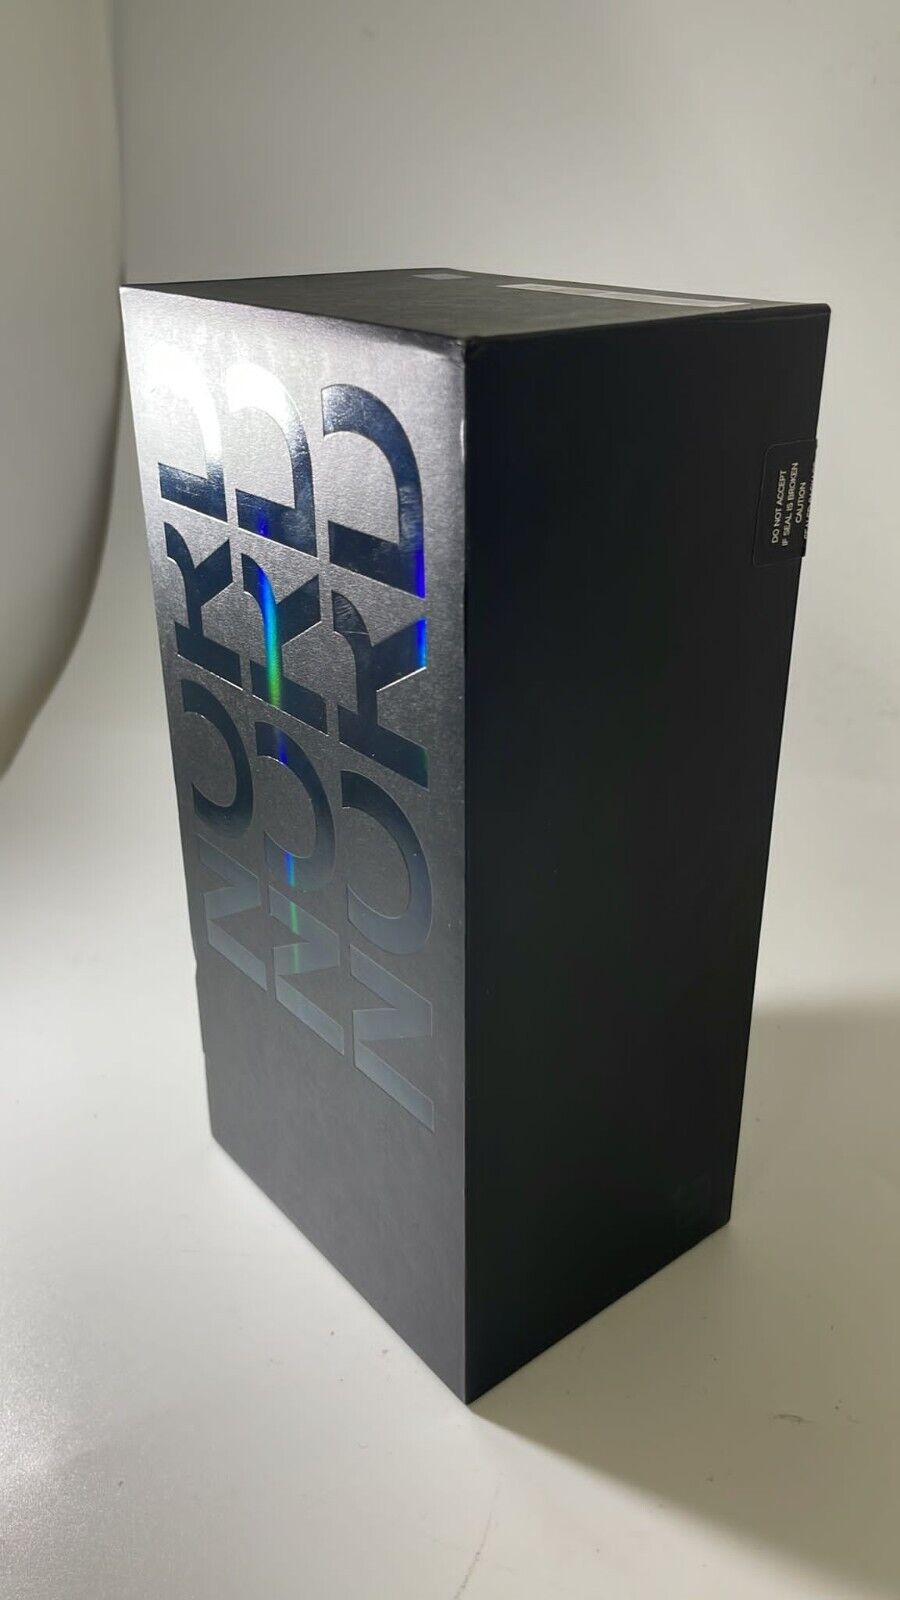 OnePlus-Nord-CE-2-5G-8GB-RAM-128GB-ROM-Bahama-Blue-165503642365-5